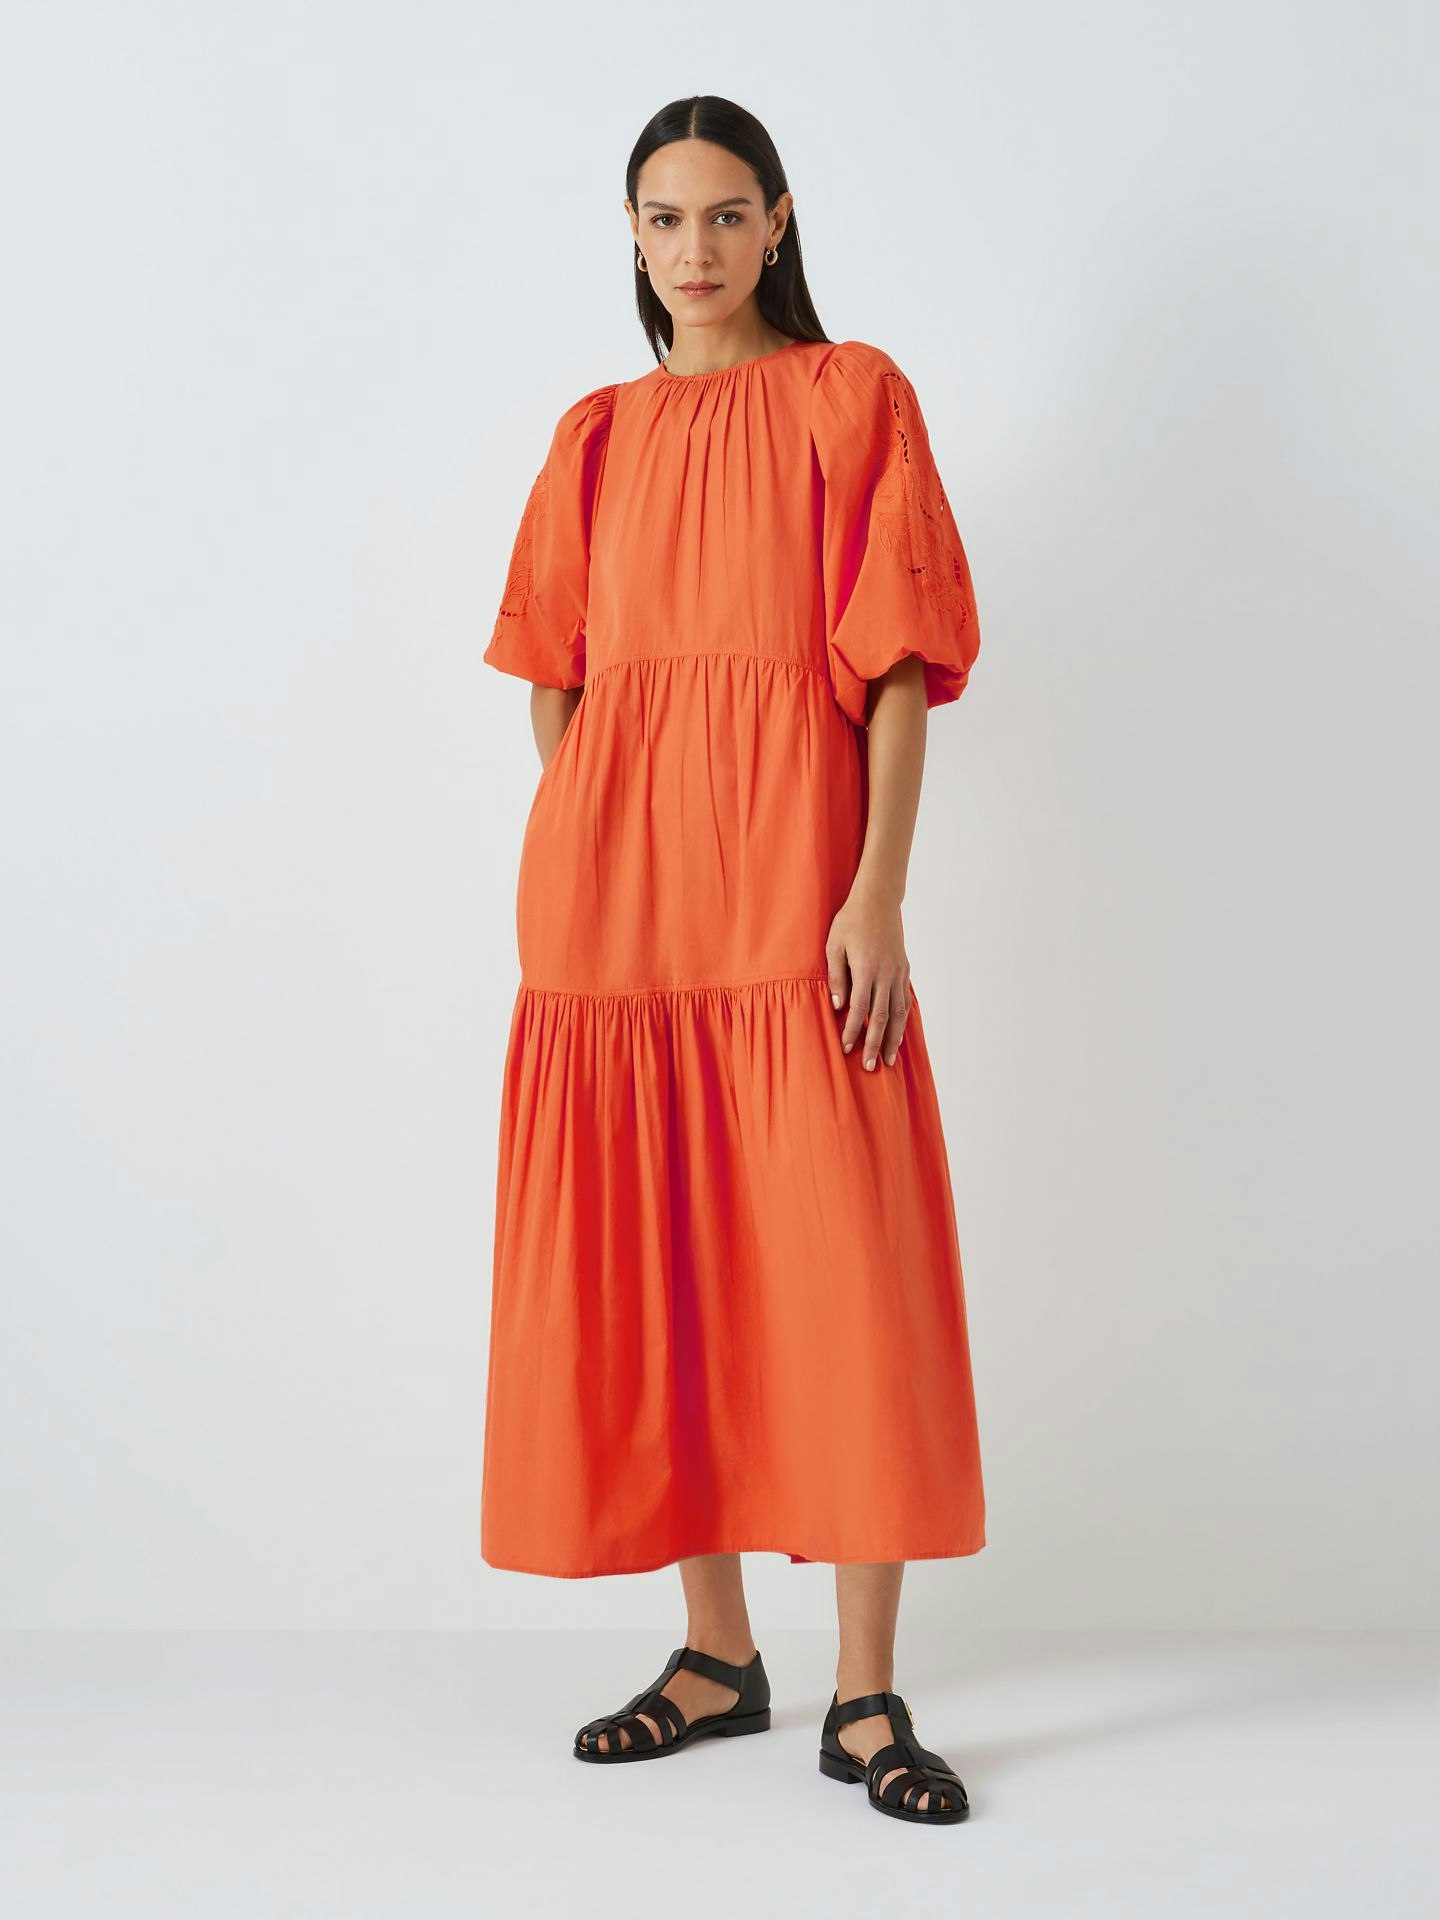 John Lewis Orange Cutwork Sleeve Tiered Dress